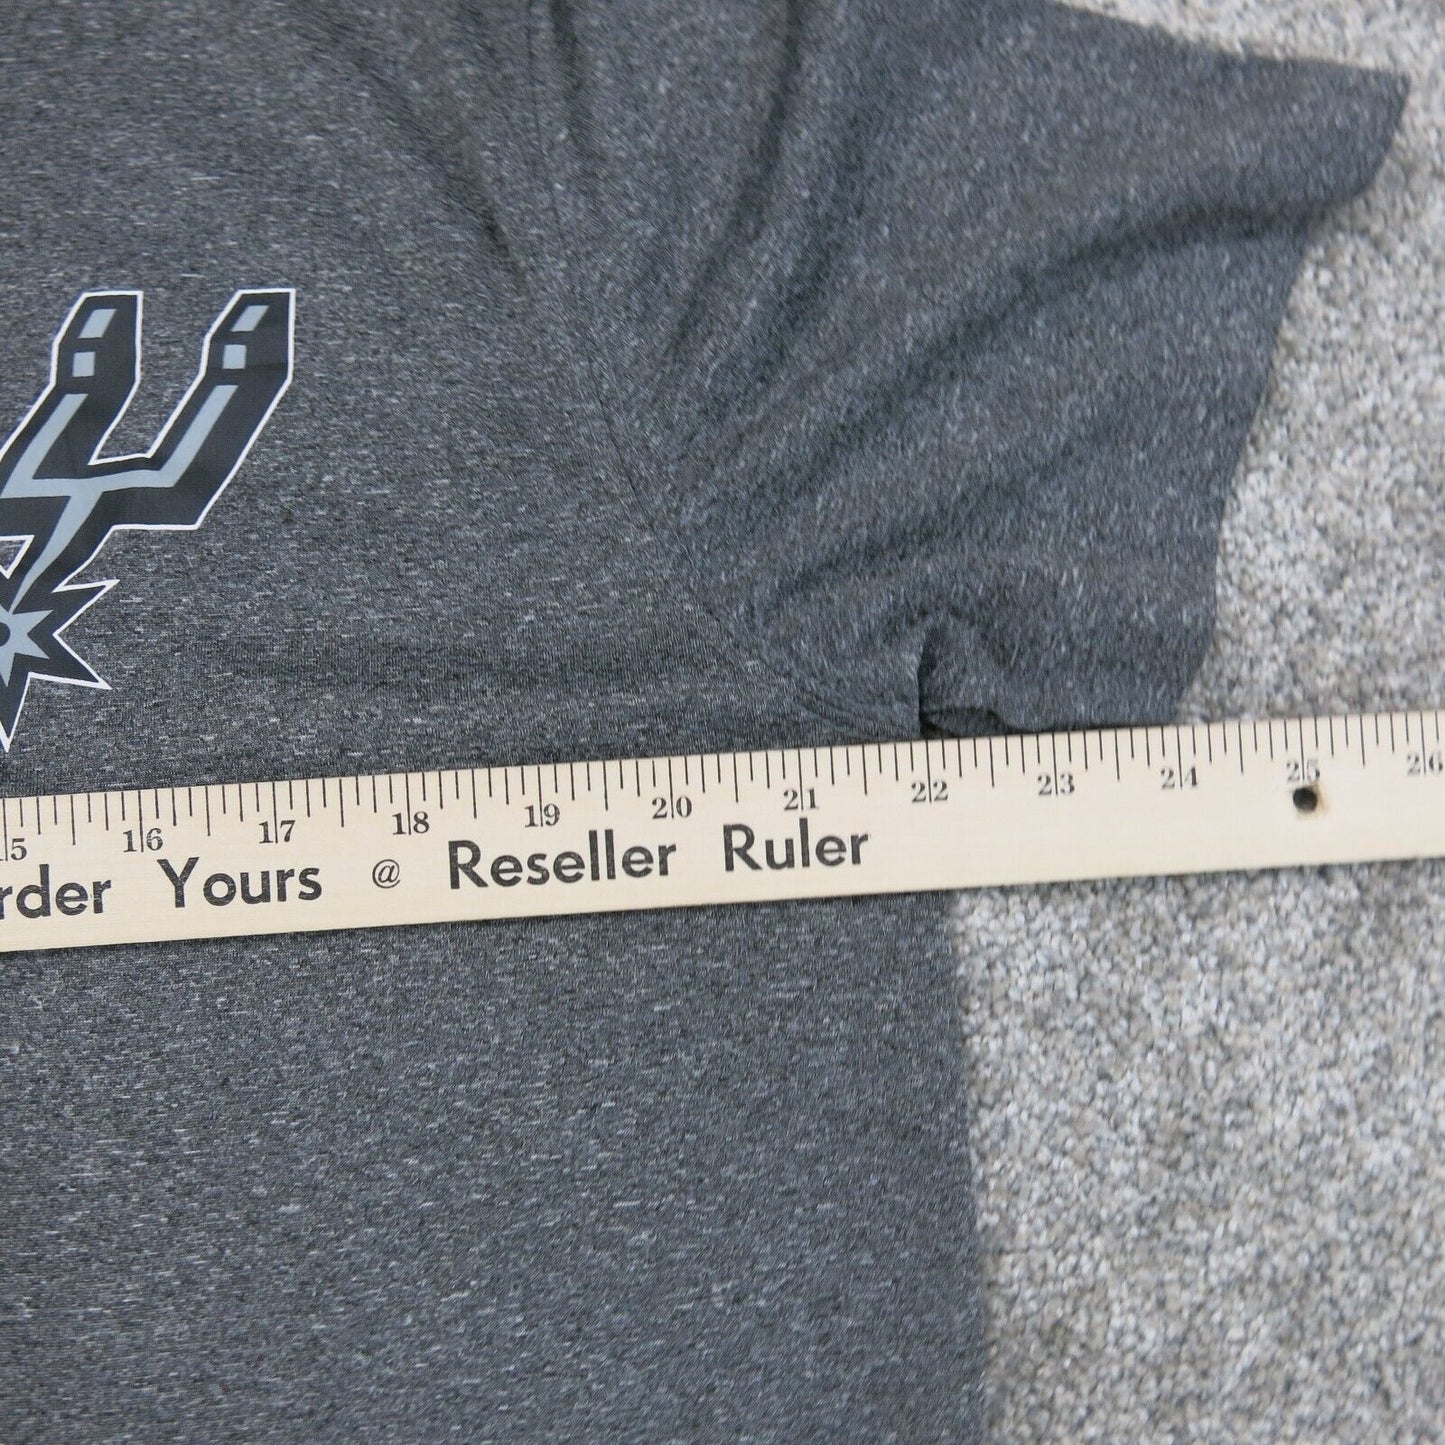 NBA Mens Casual T Shirt Spurs Basketball Graphic Tee Short Sleeves Gray Size XL